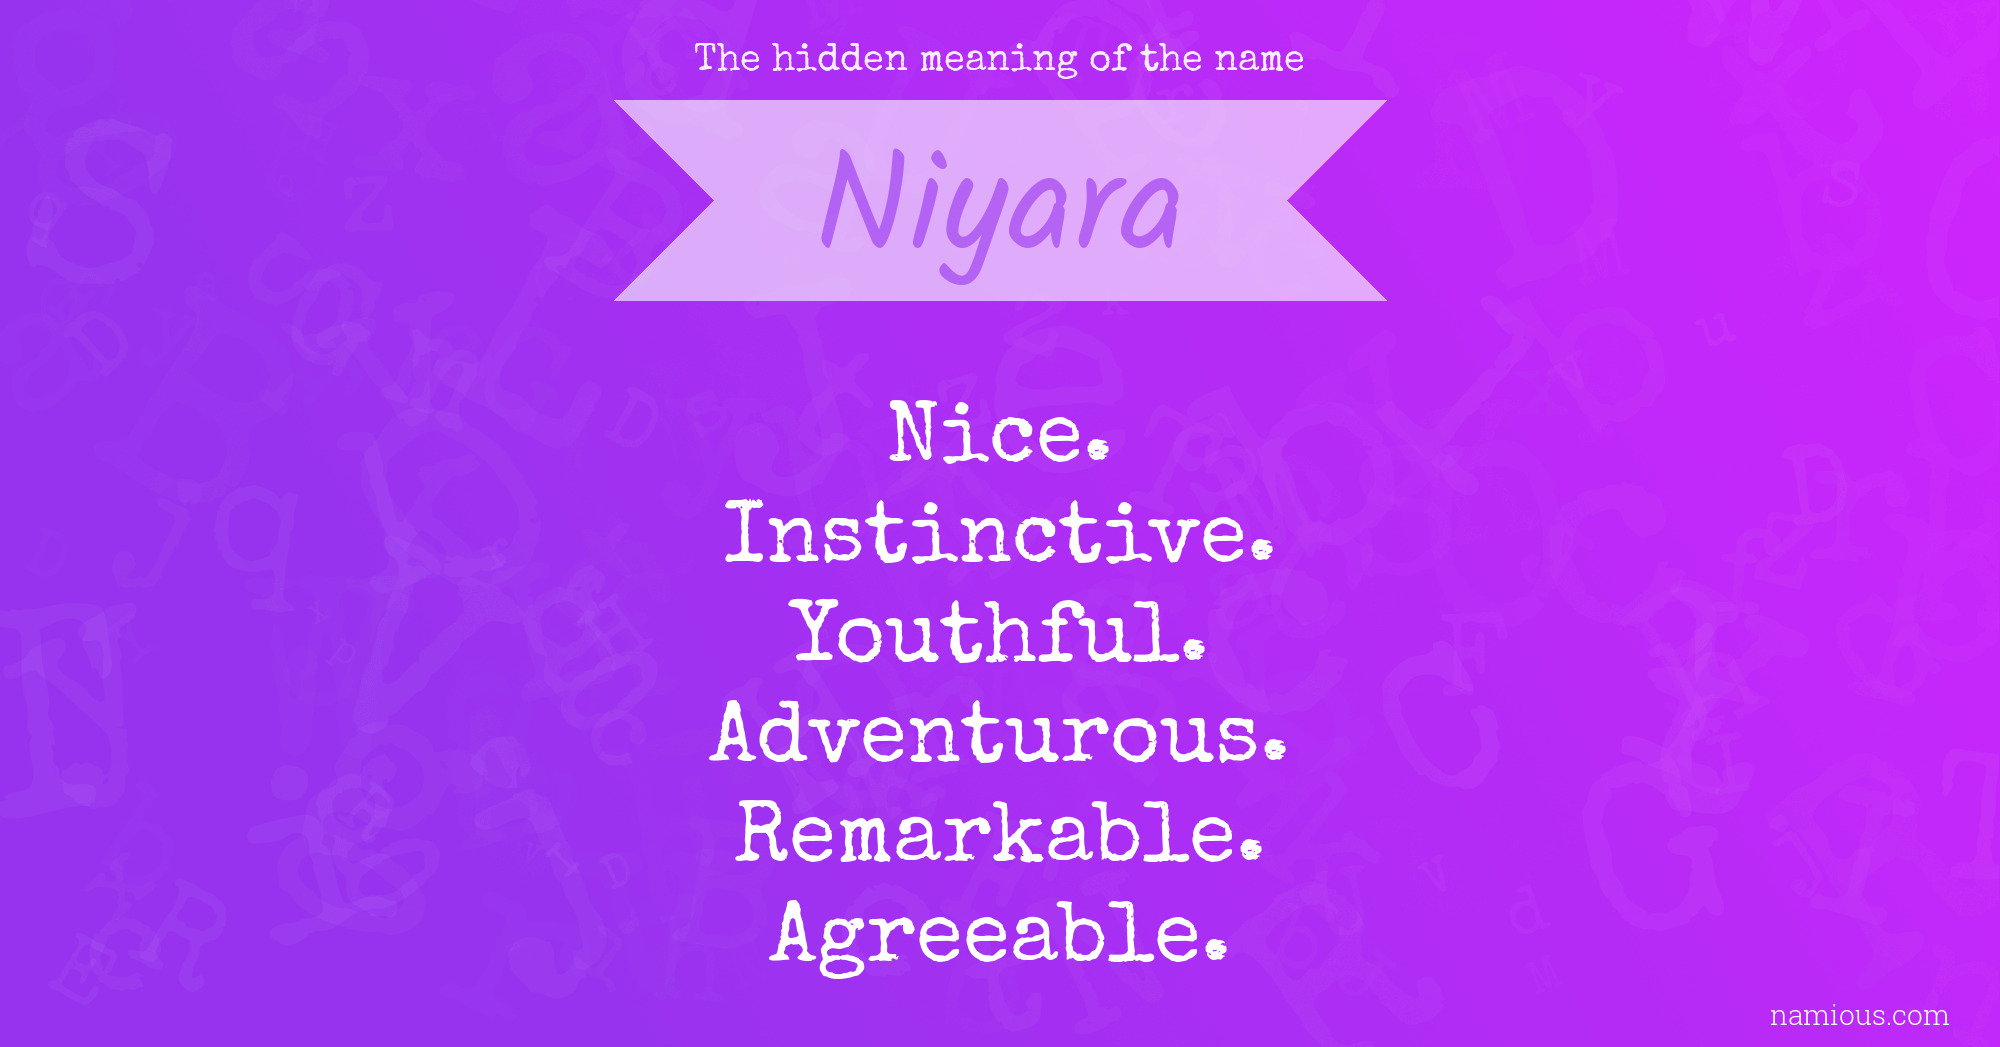 The hidden meaning of the name Niyara